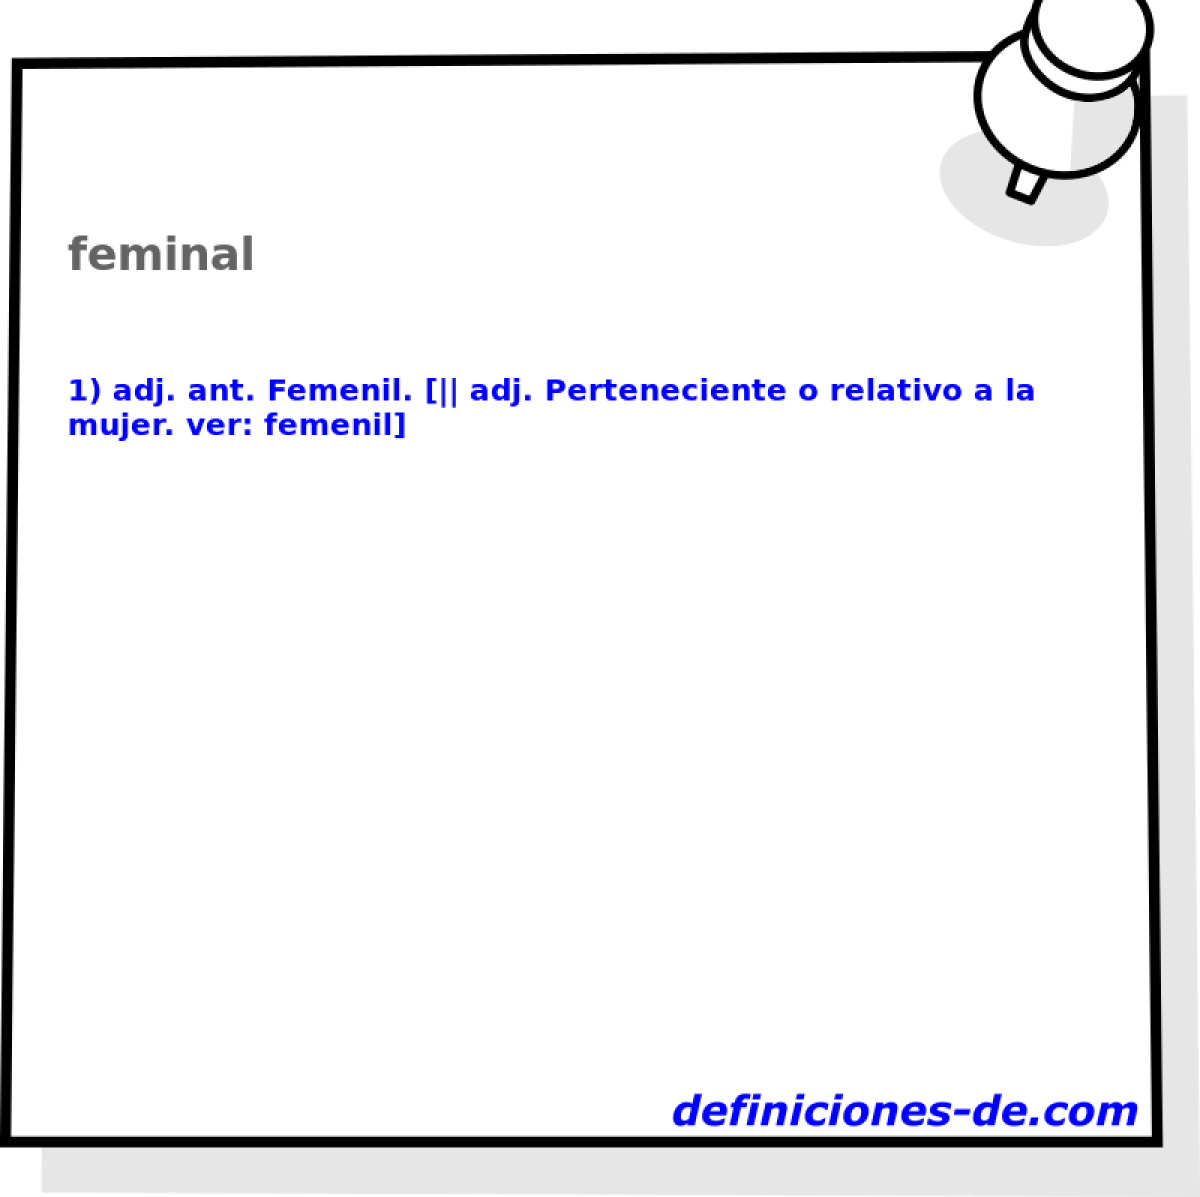 feminal 